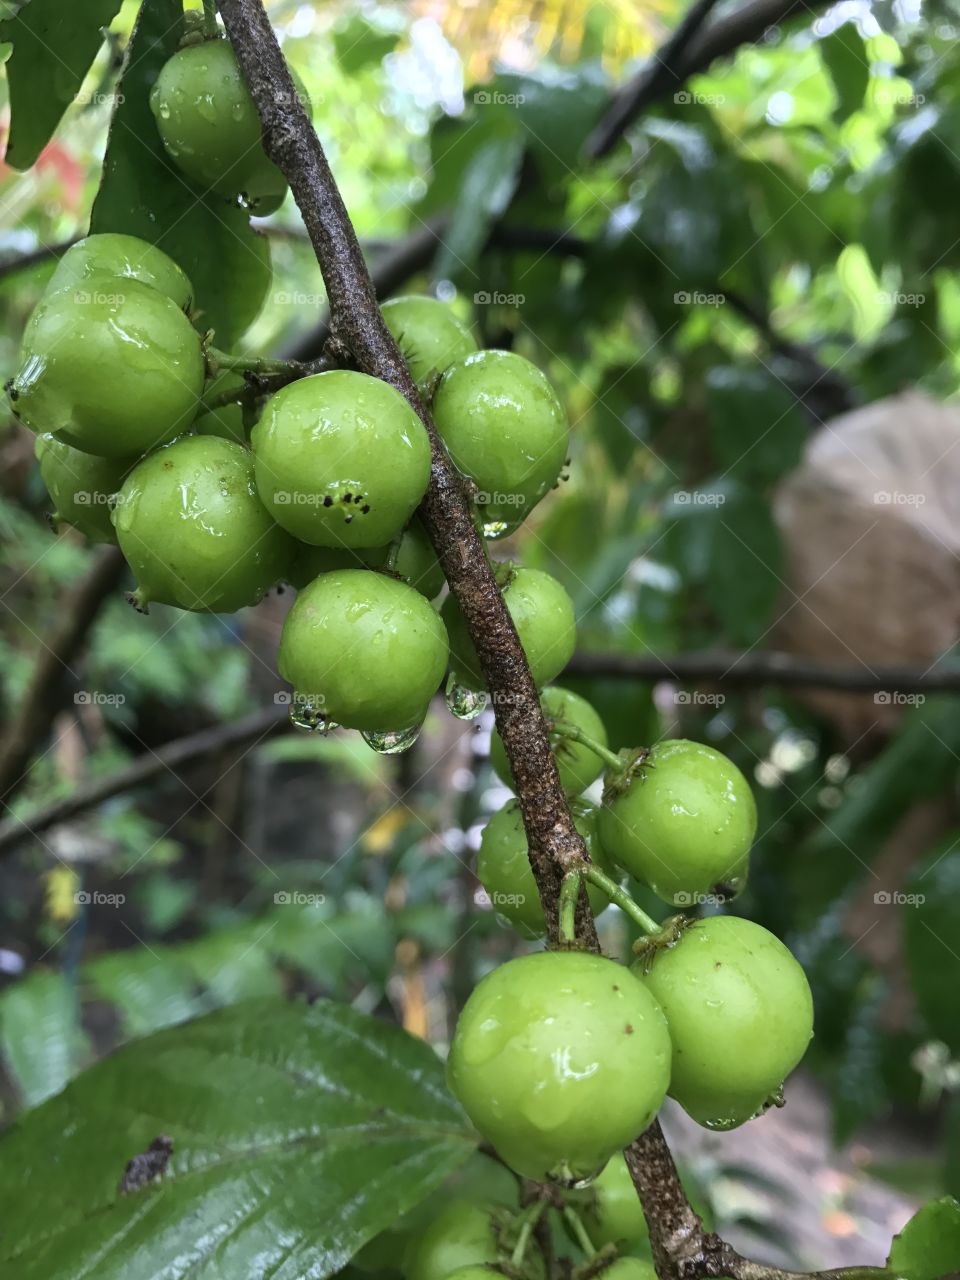 Green fruits in rain